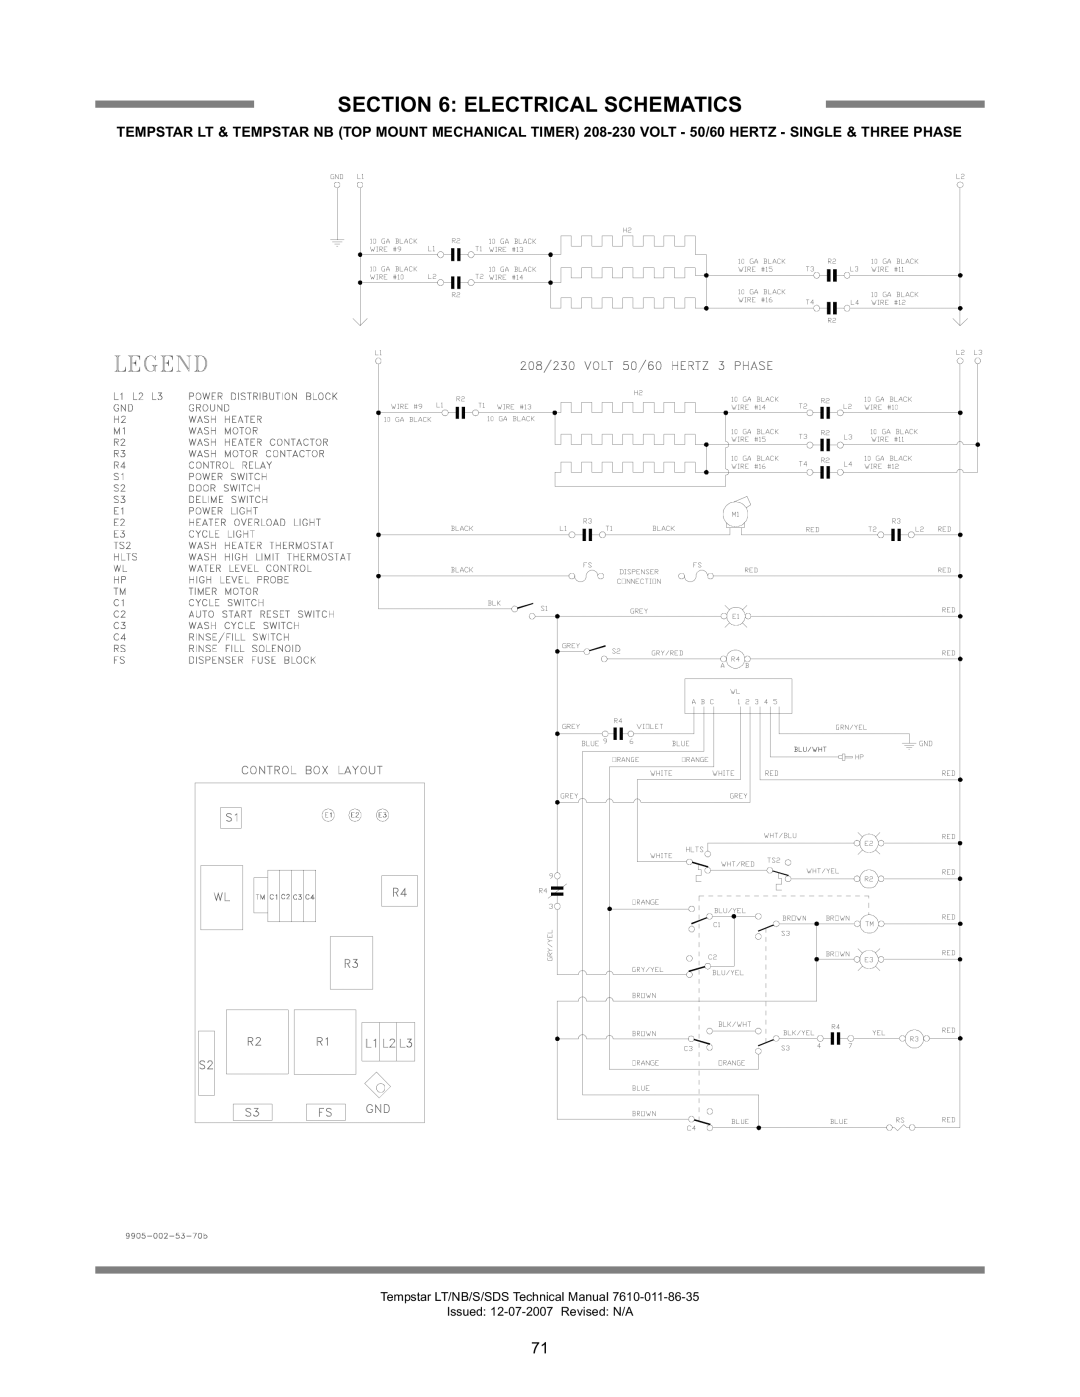 Jackson Tempstar Series technical manual Electrical Schematics 